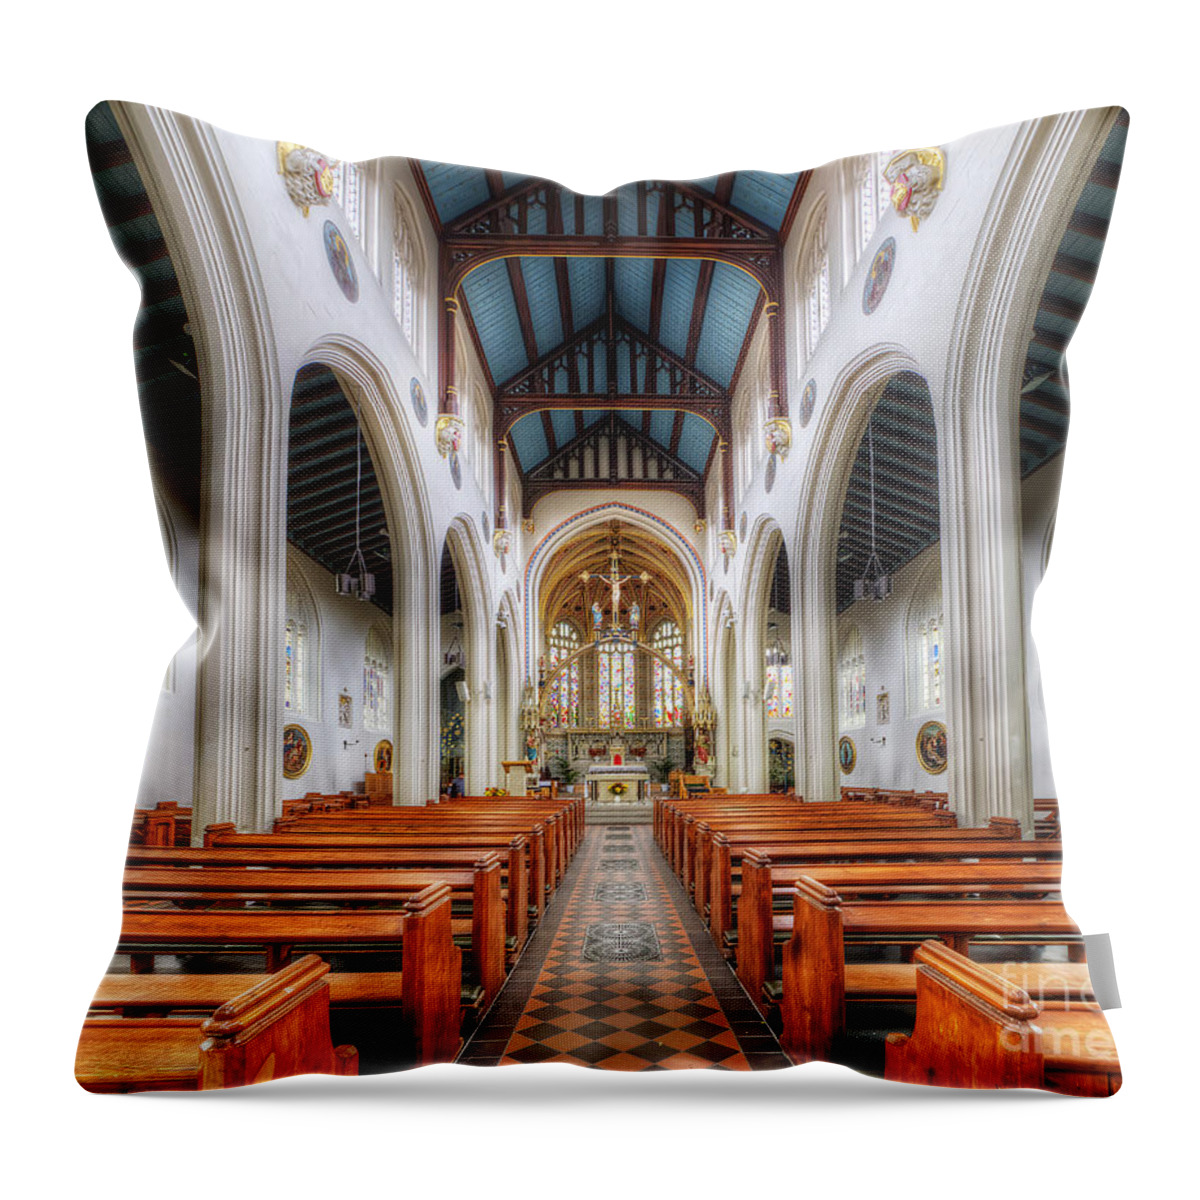 Yhun Suarez Throw Pillow featuring the photograph St Mary's Catholic Church - The Nave by Yhun Suarez